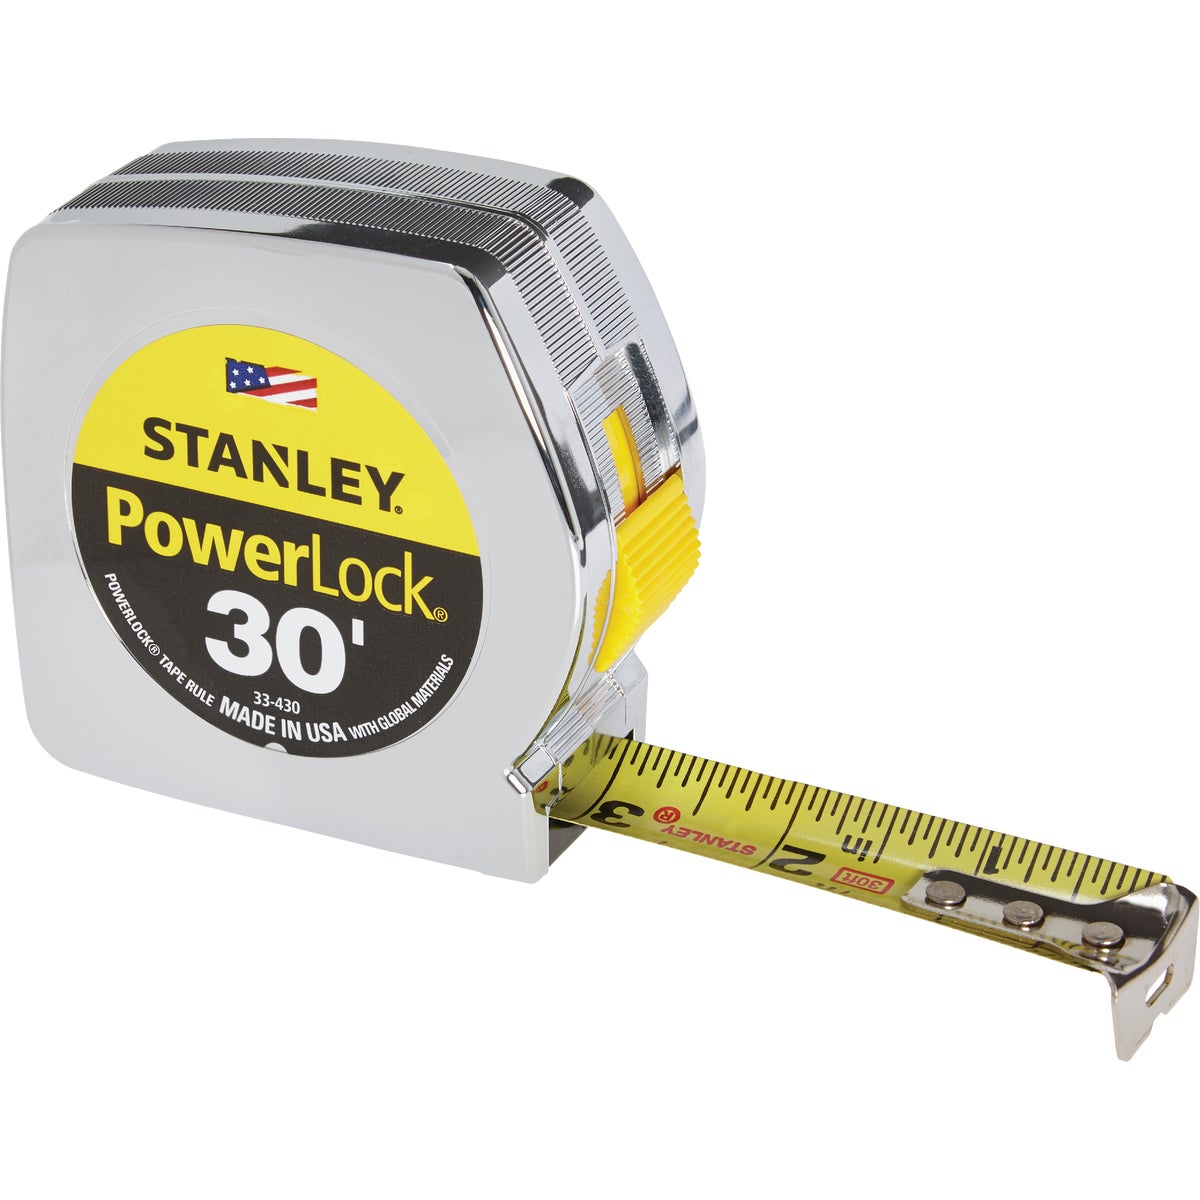 Stanley PowerLock 30 Ft. Tape Measure